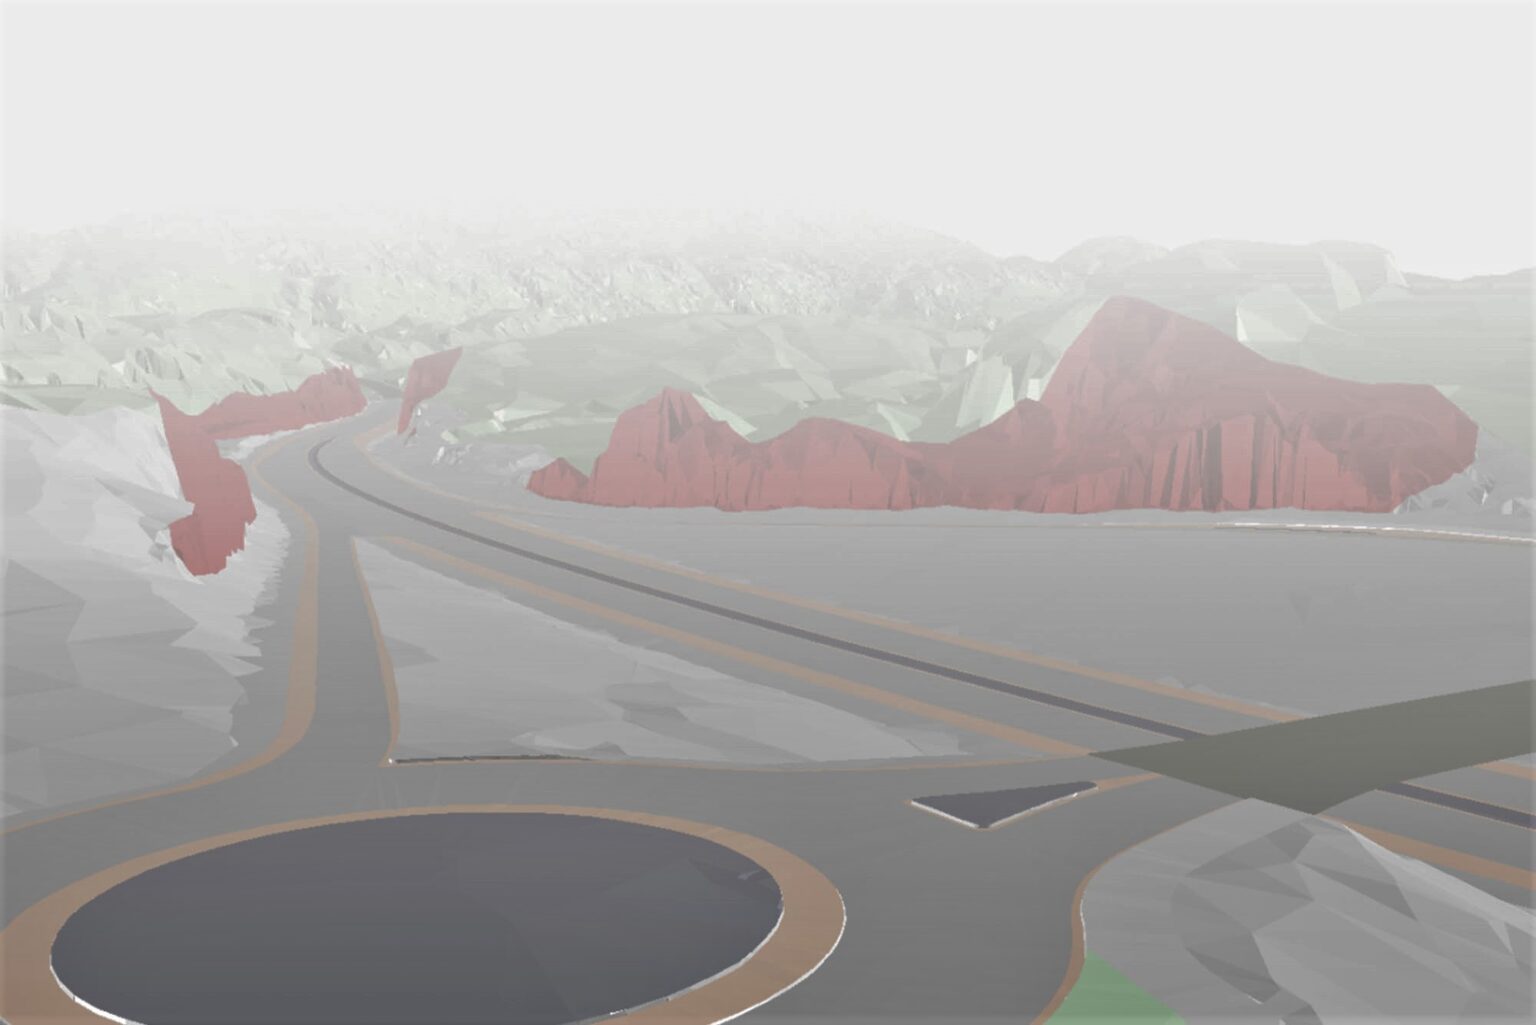 a 3d terrain model create by scan survey